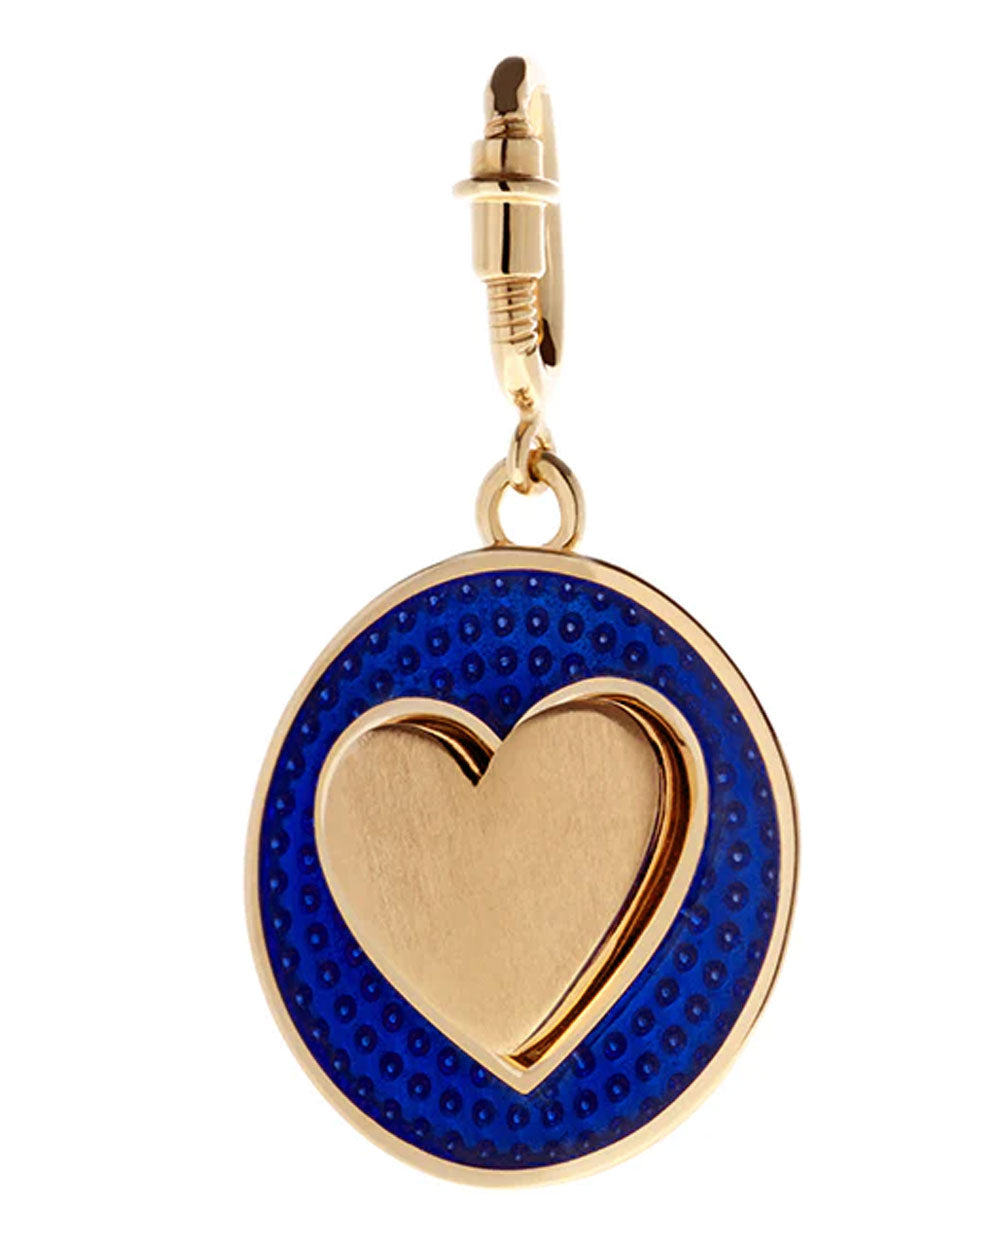 Navy Blue Heart Charm